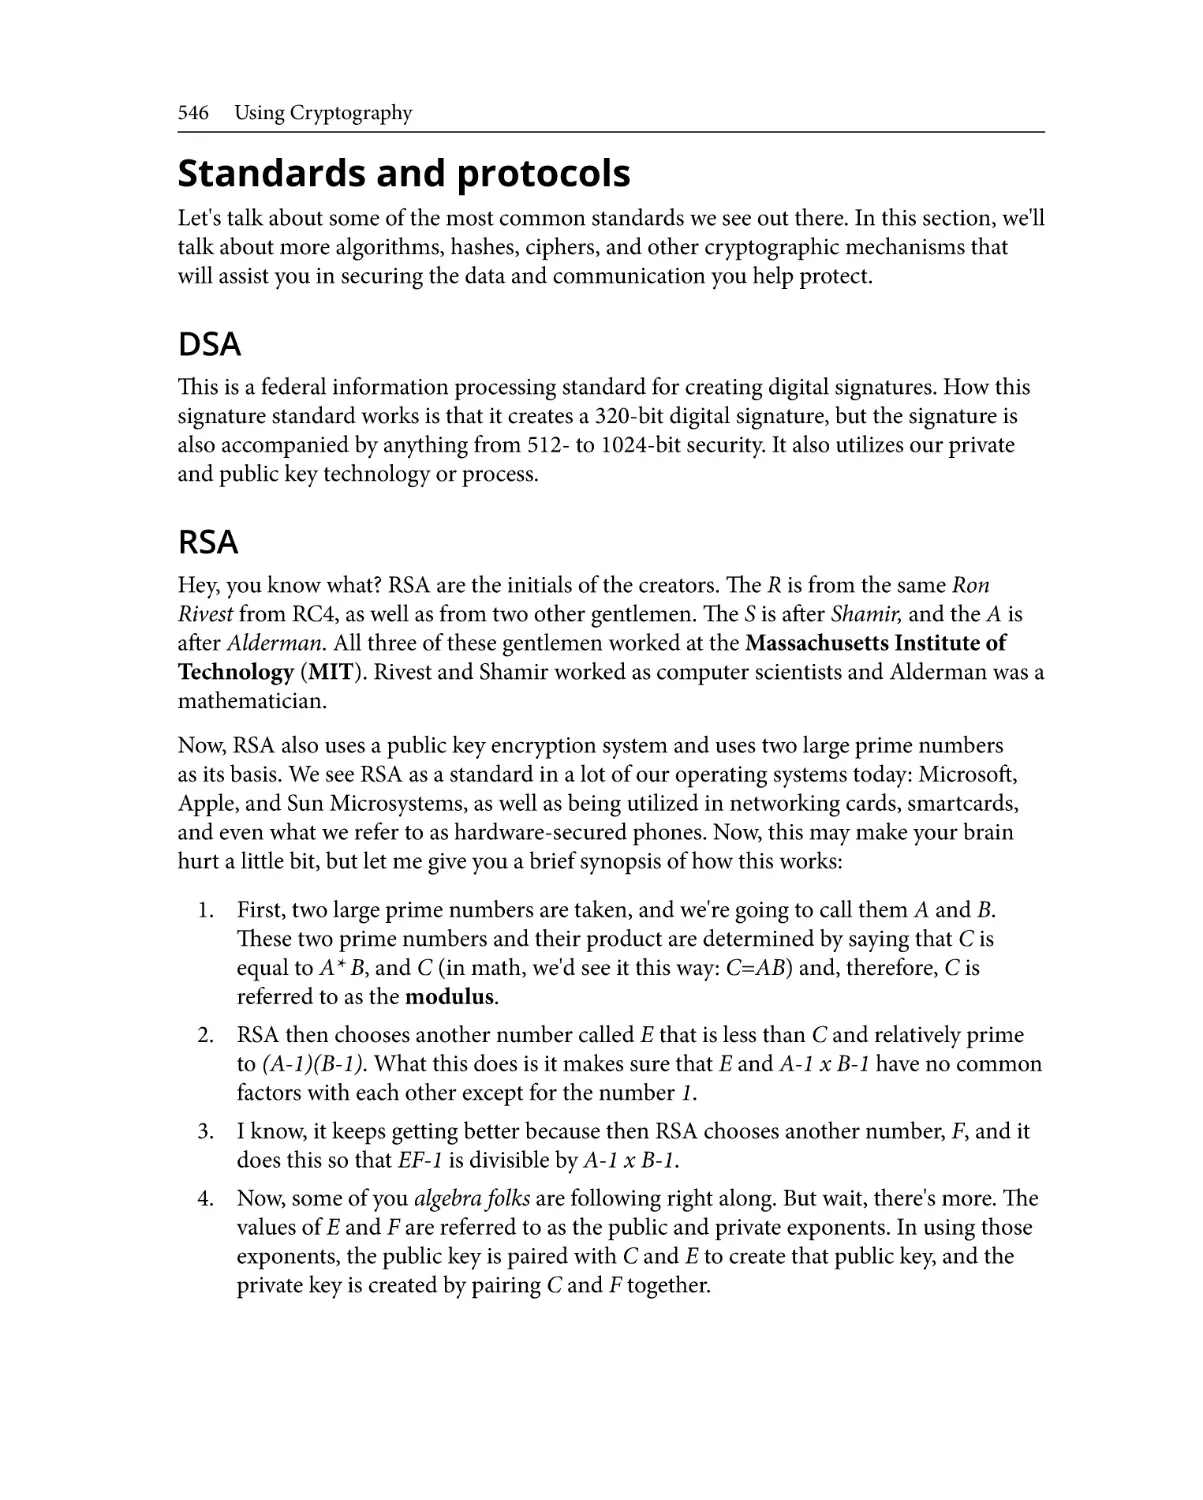 Standards and protocols
DSA
RSA